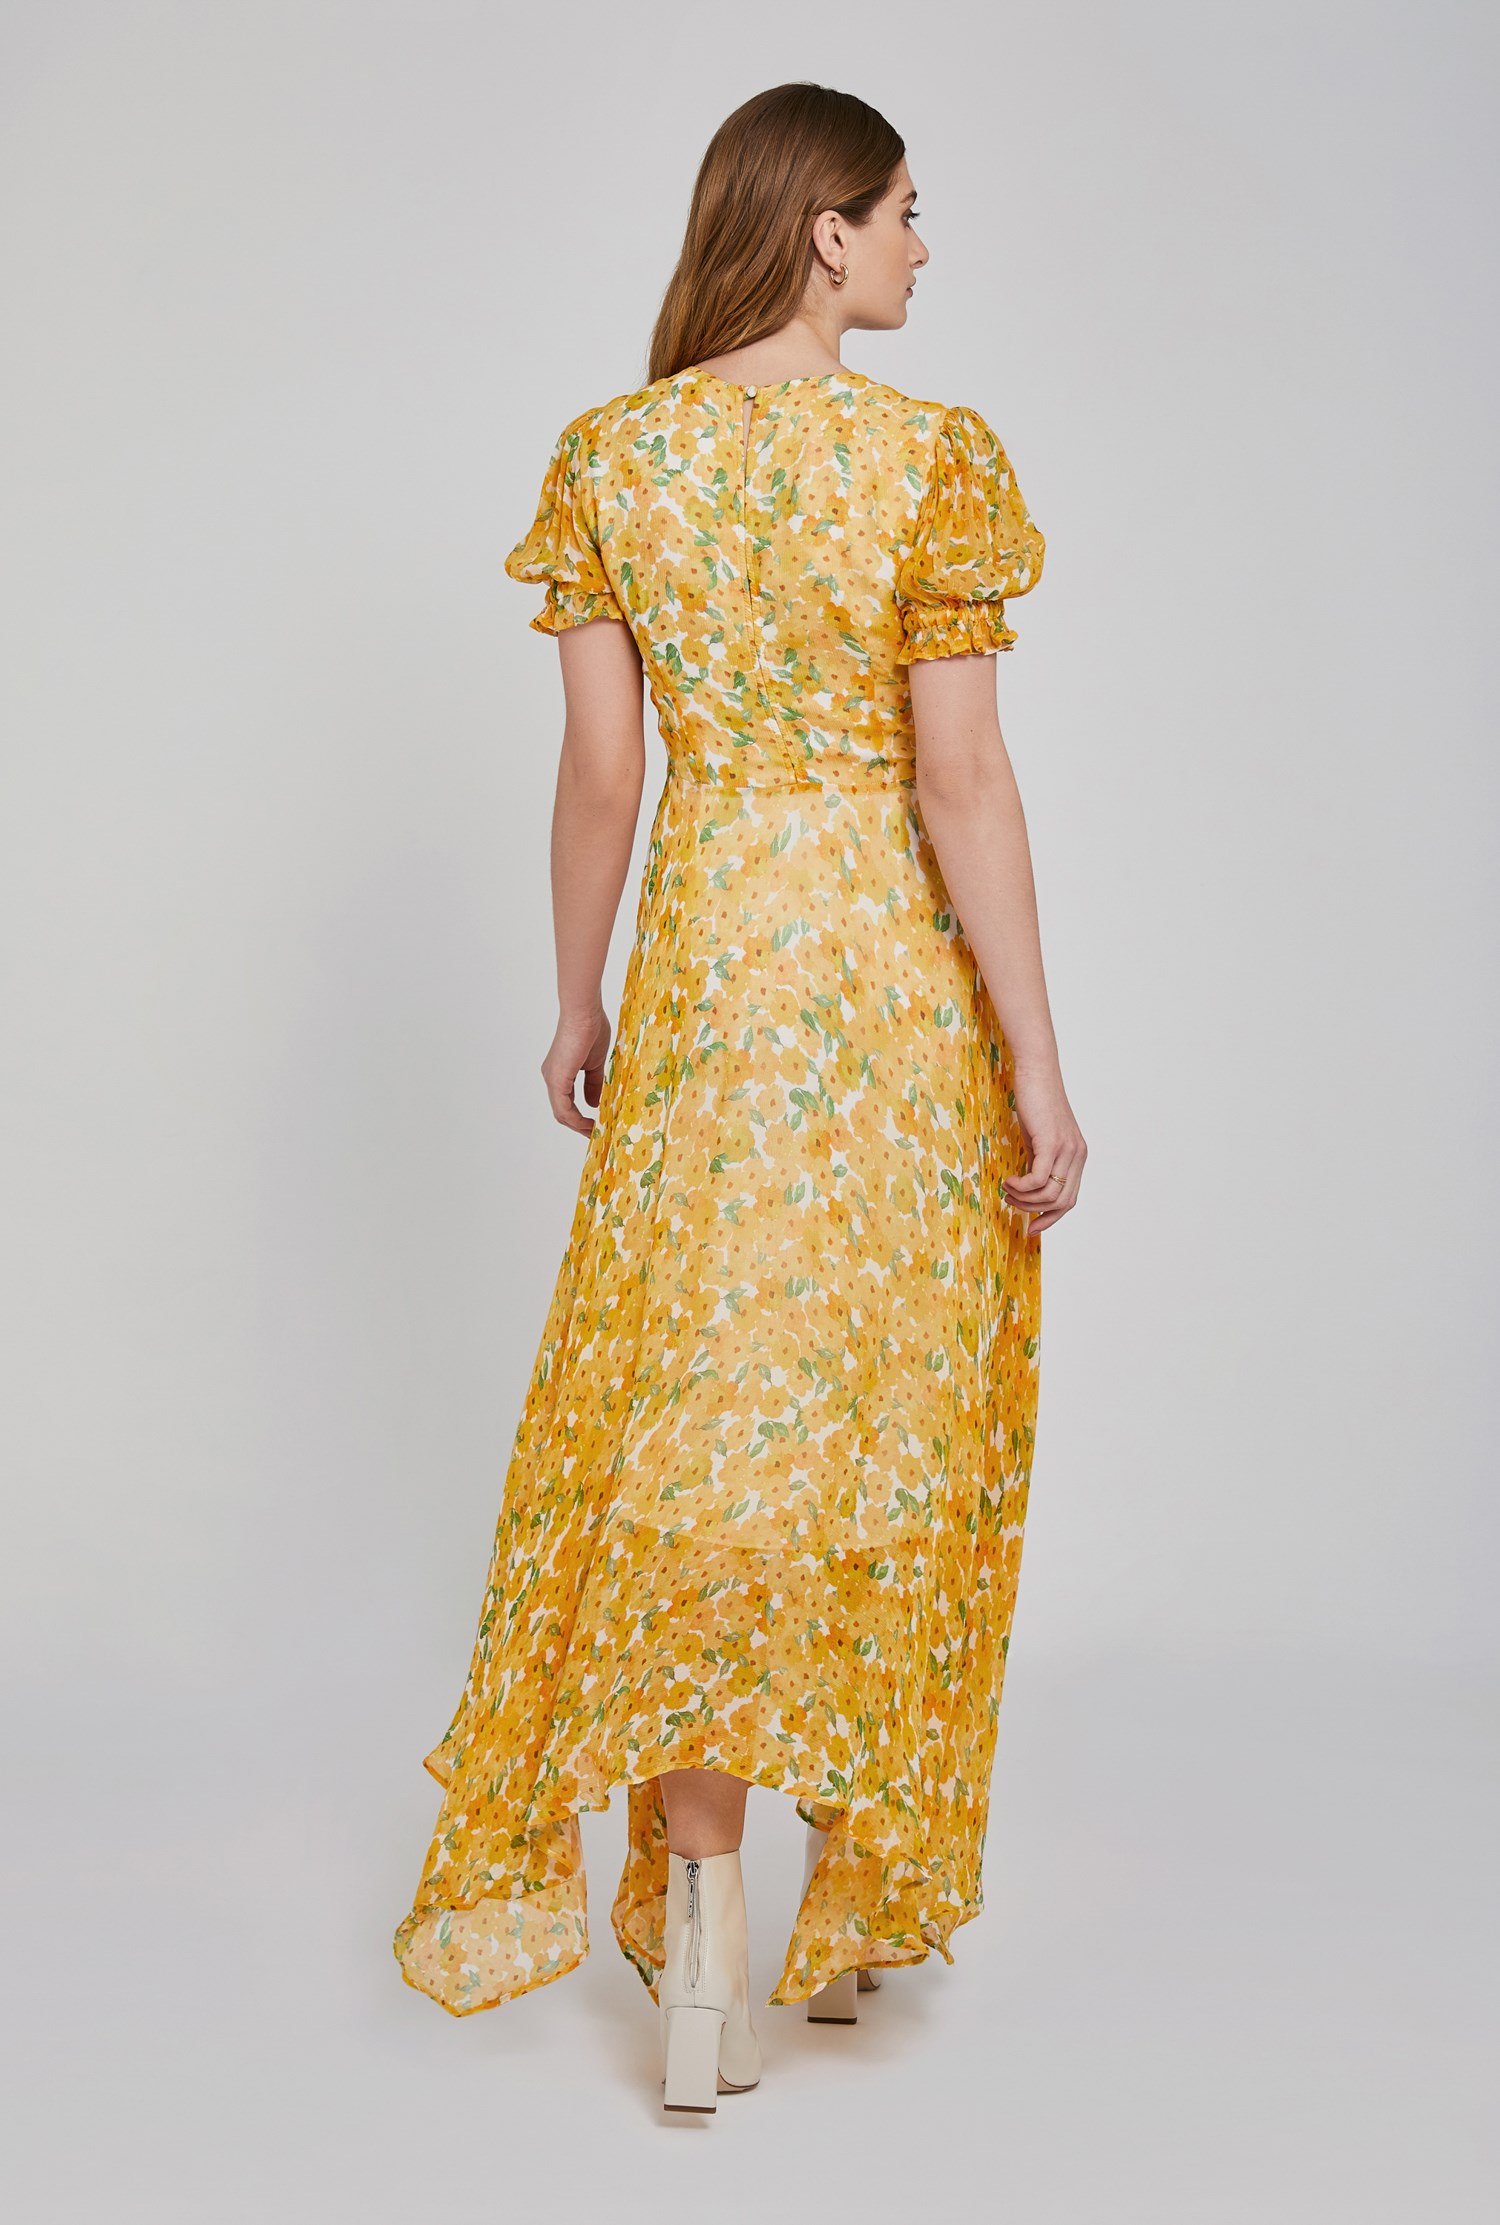 Fleur Yellow Floral Maxi Dress | Ghost London